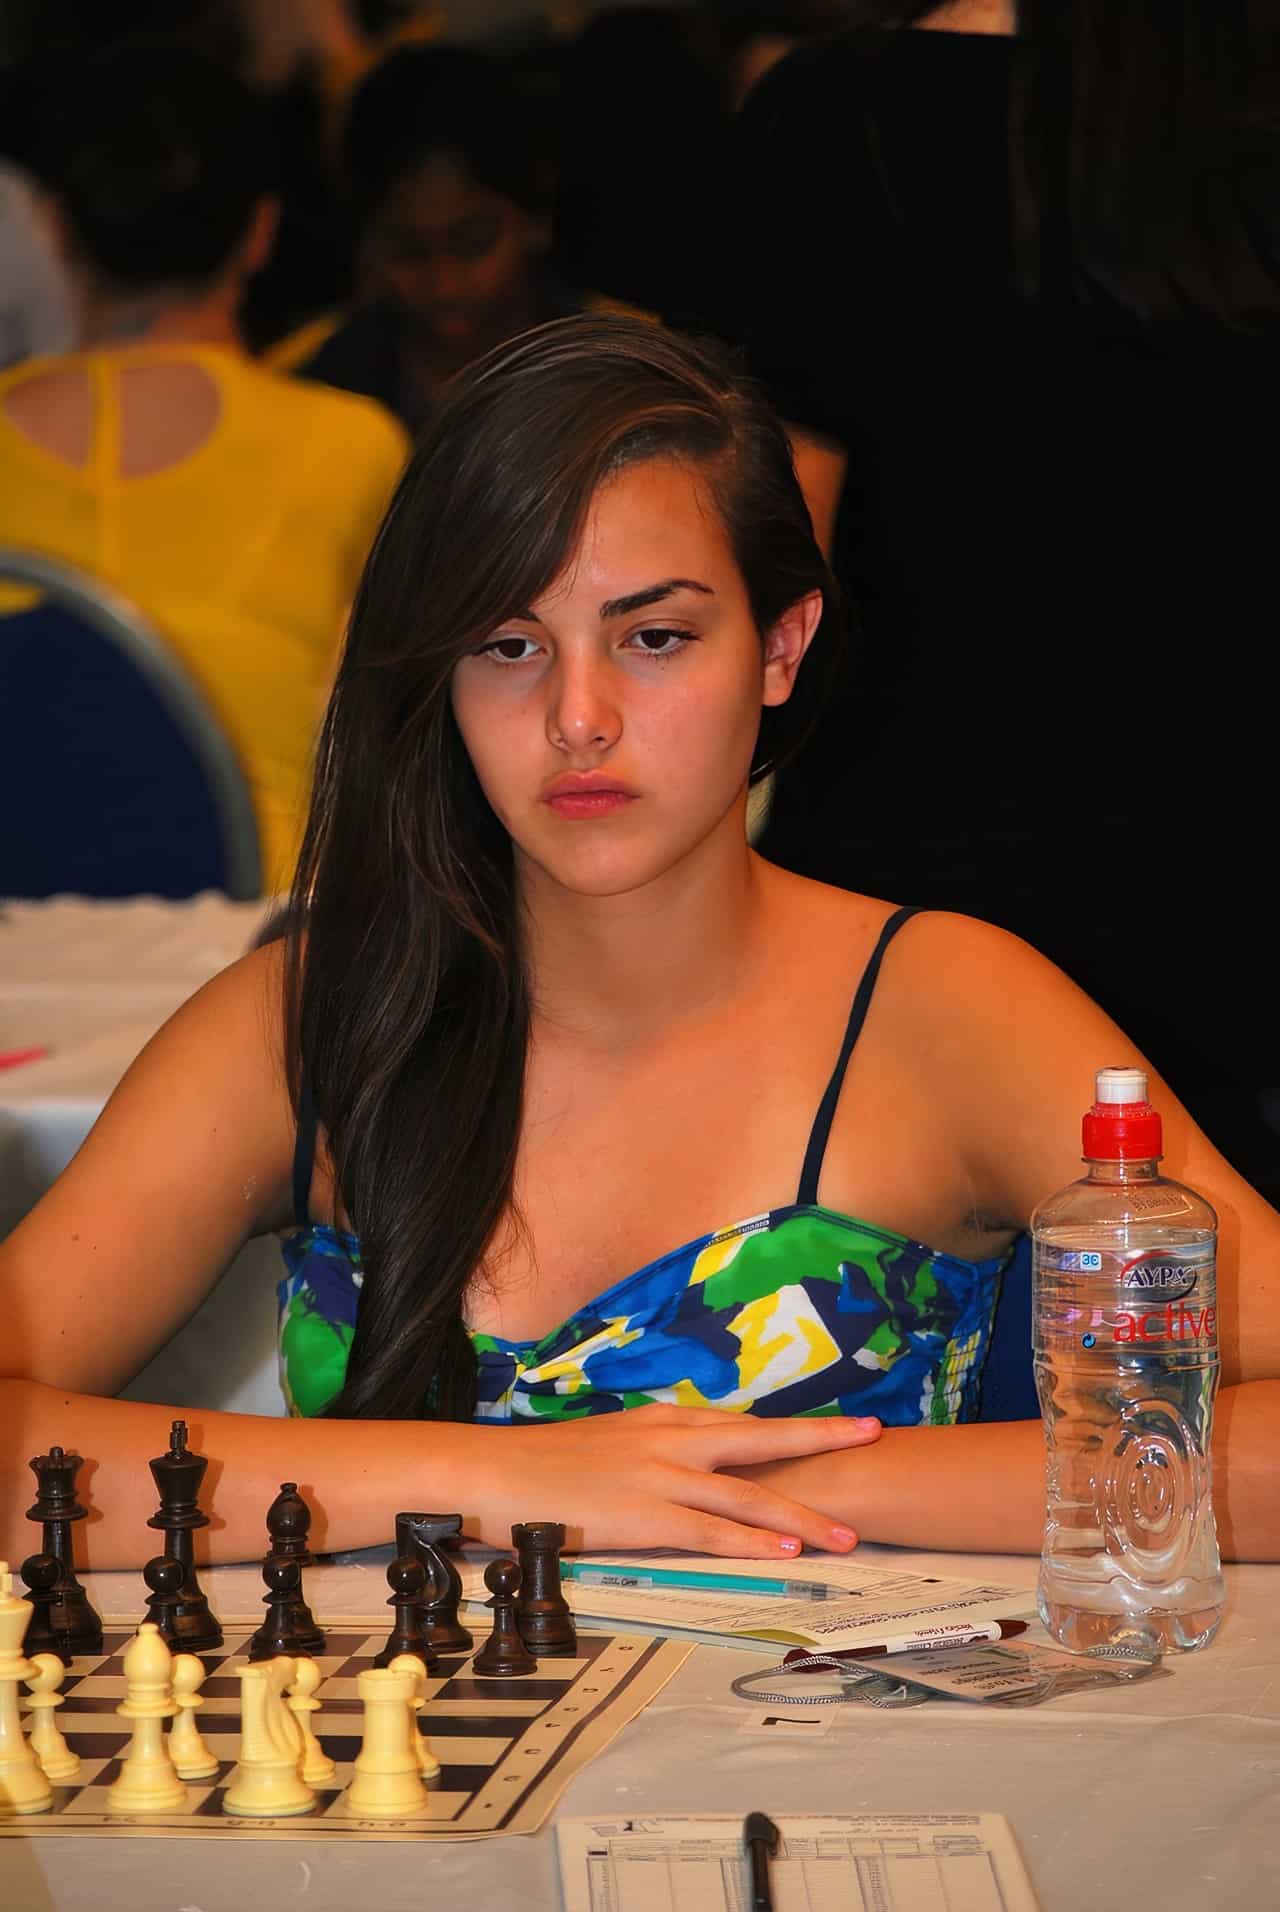 Alexandra Botez: 40th Chess Olympiad